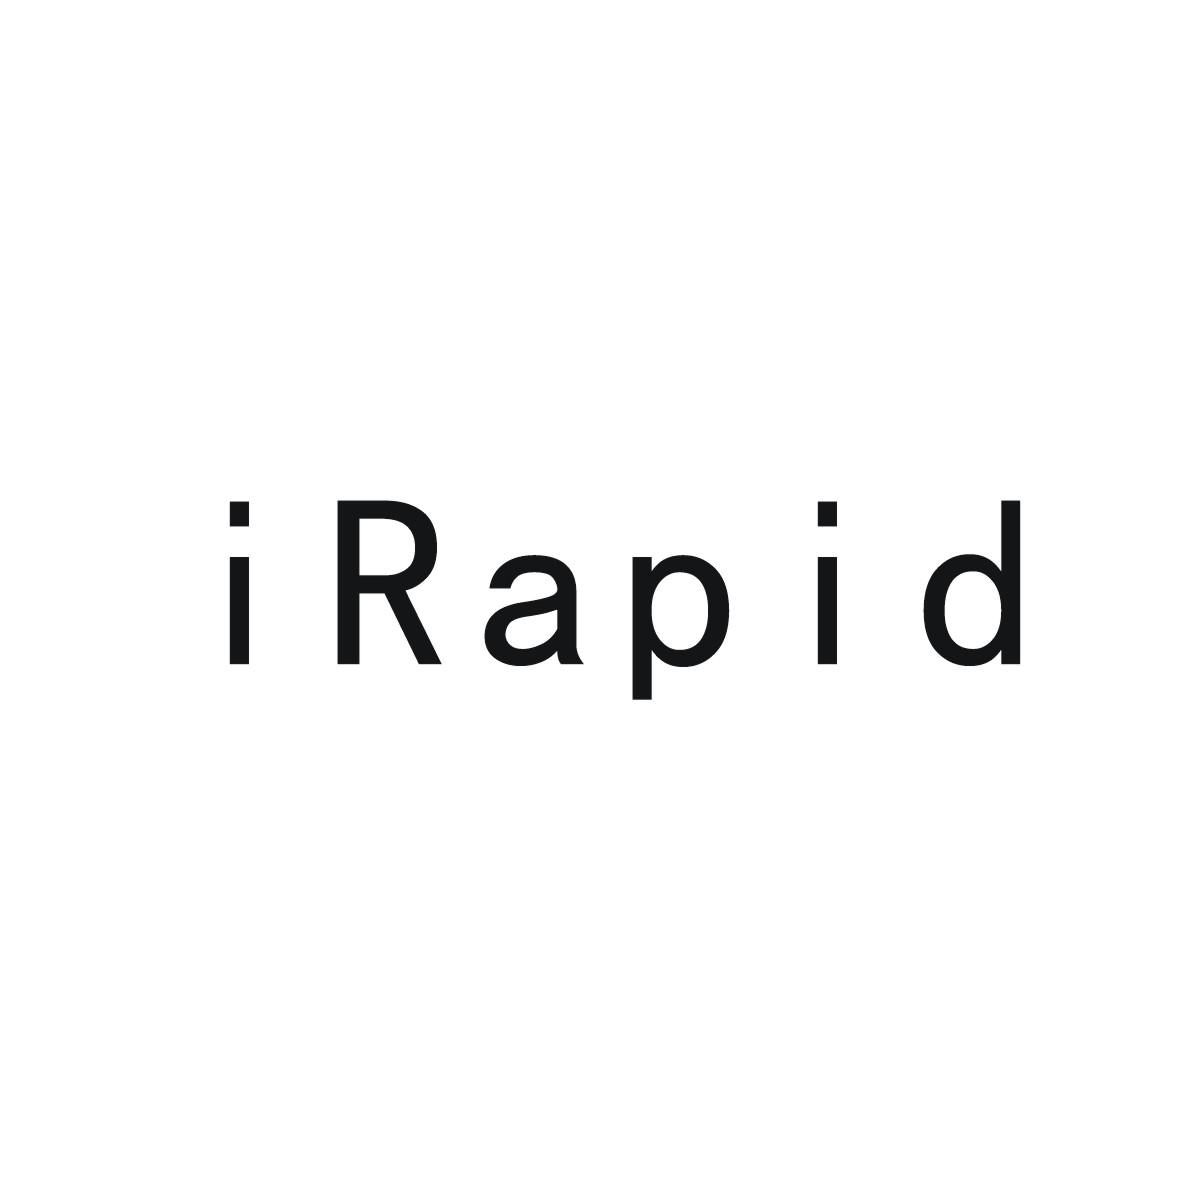 iRapid喷灯商标转让费用买卖交易流程